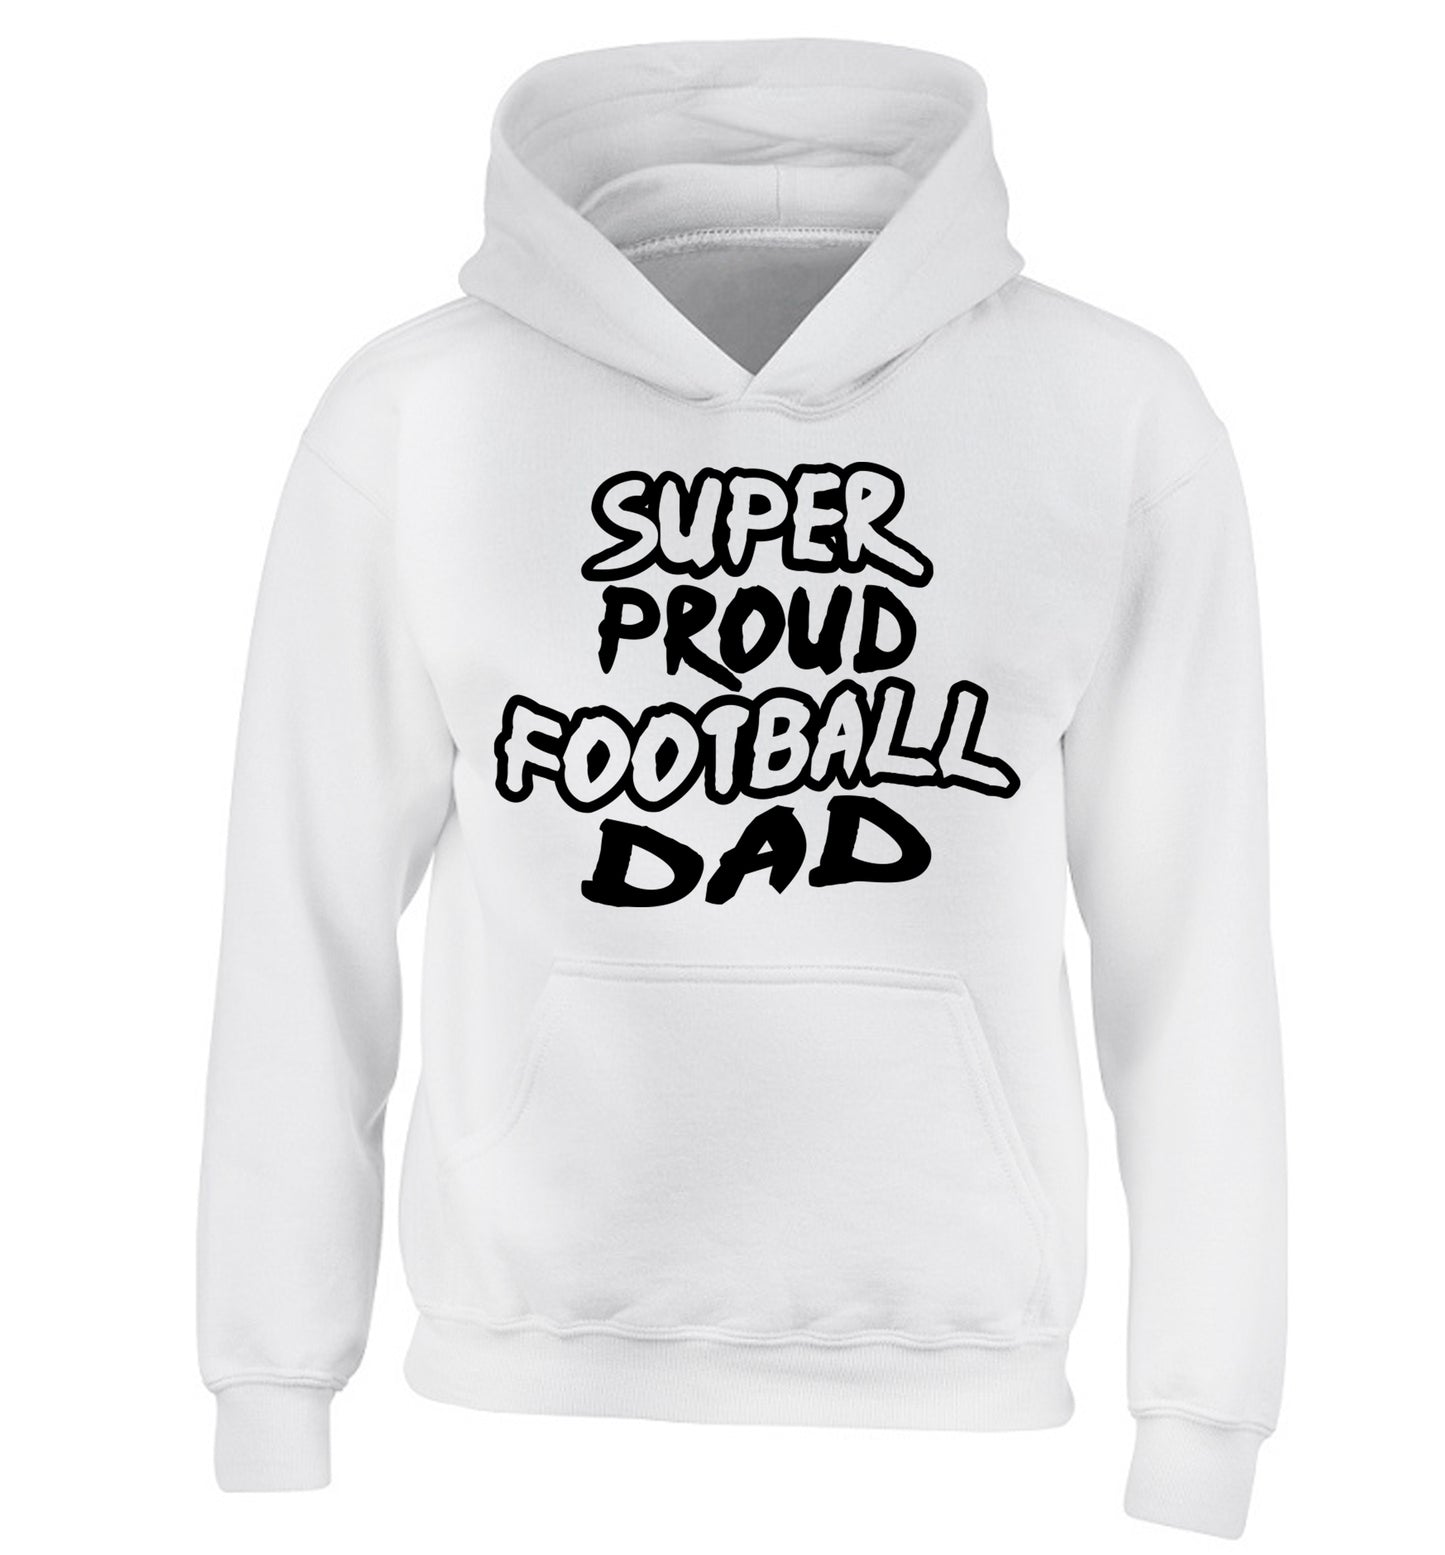 Super proud football dad children's white hoodie 12-14 Years